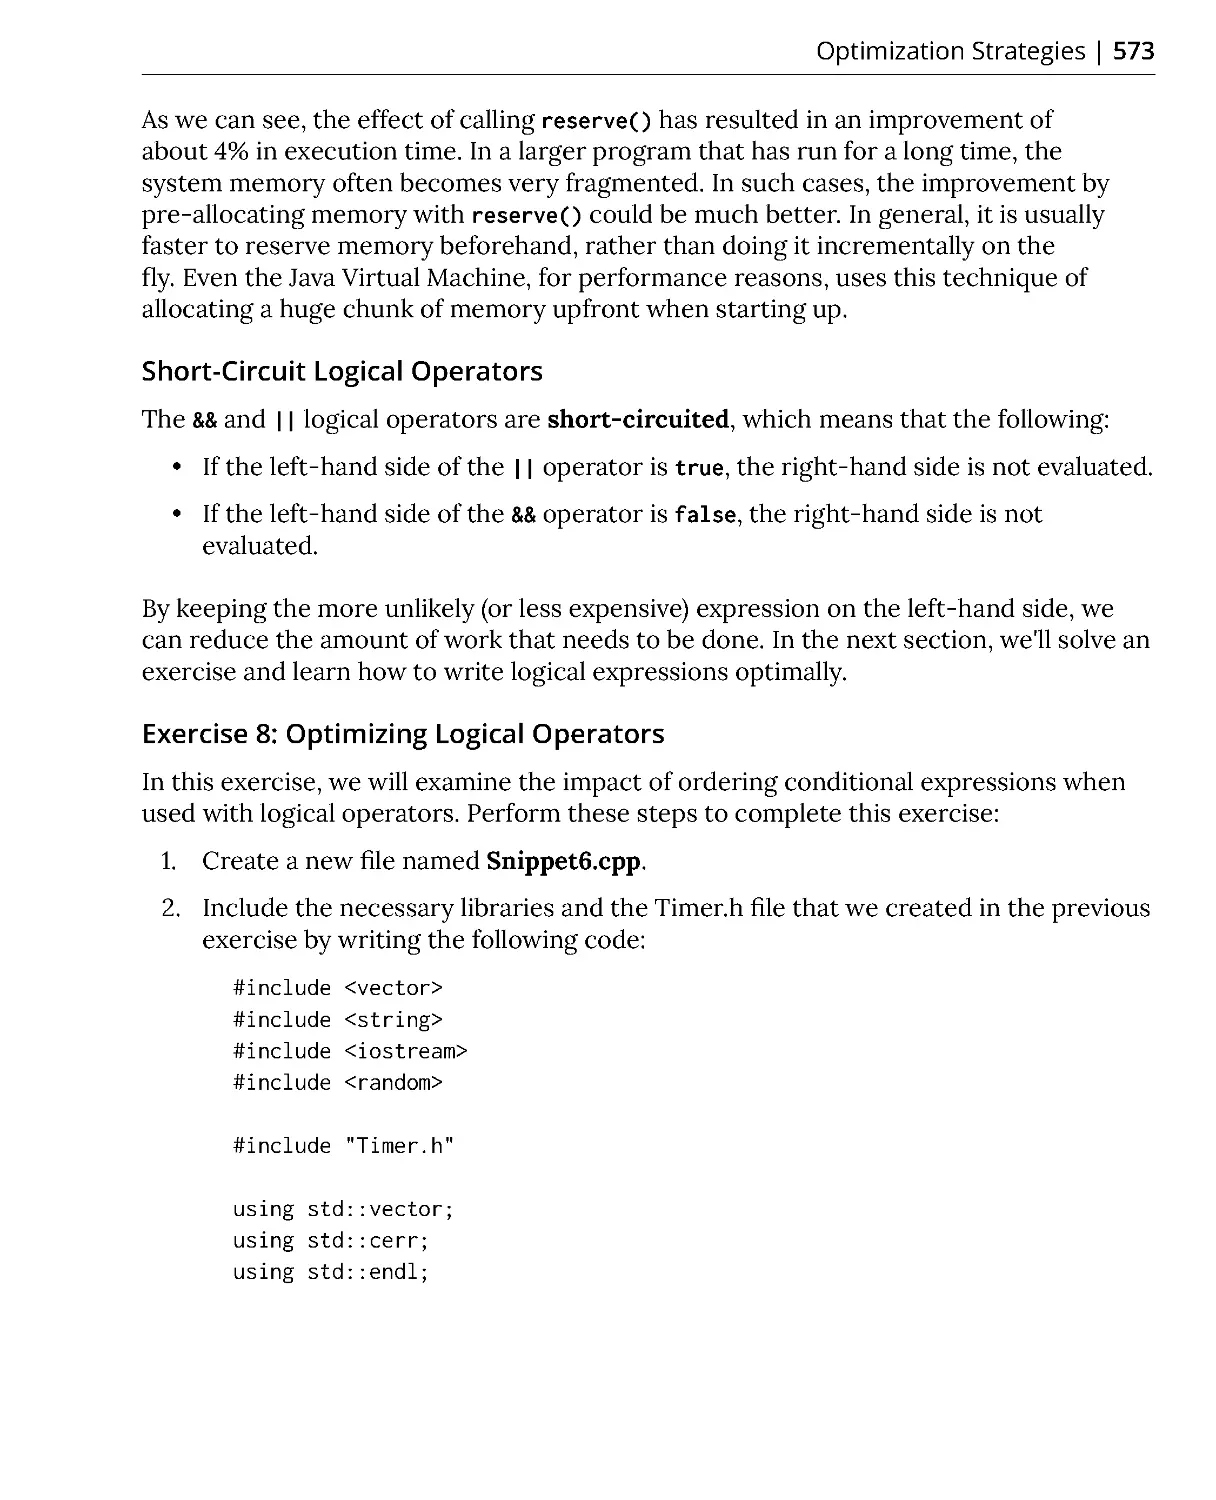 Short-Circuit Logical Operators
Exercise 8: Optimizing Logical Operators